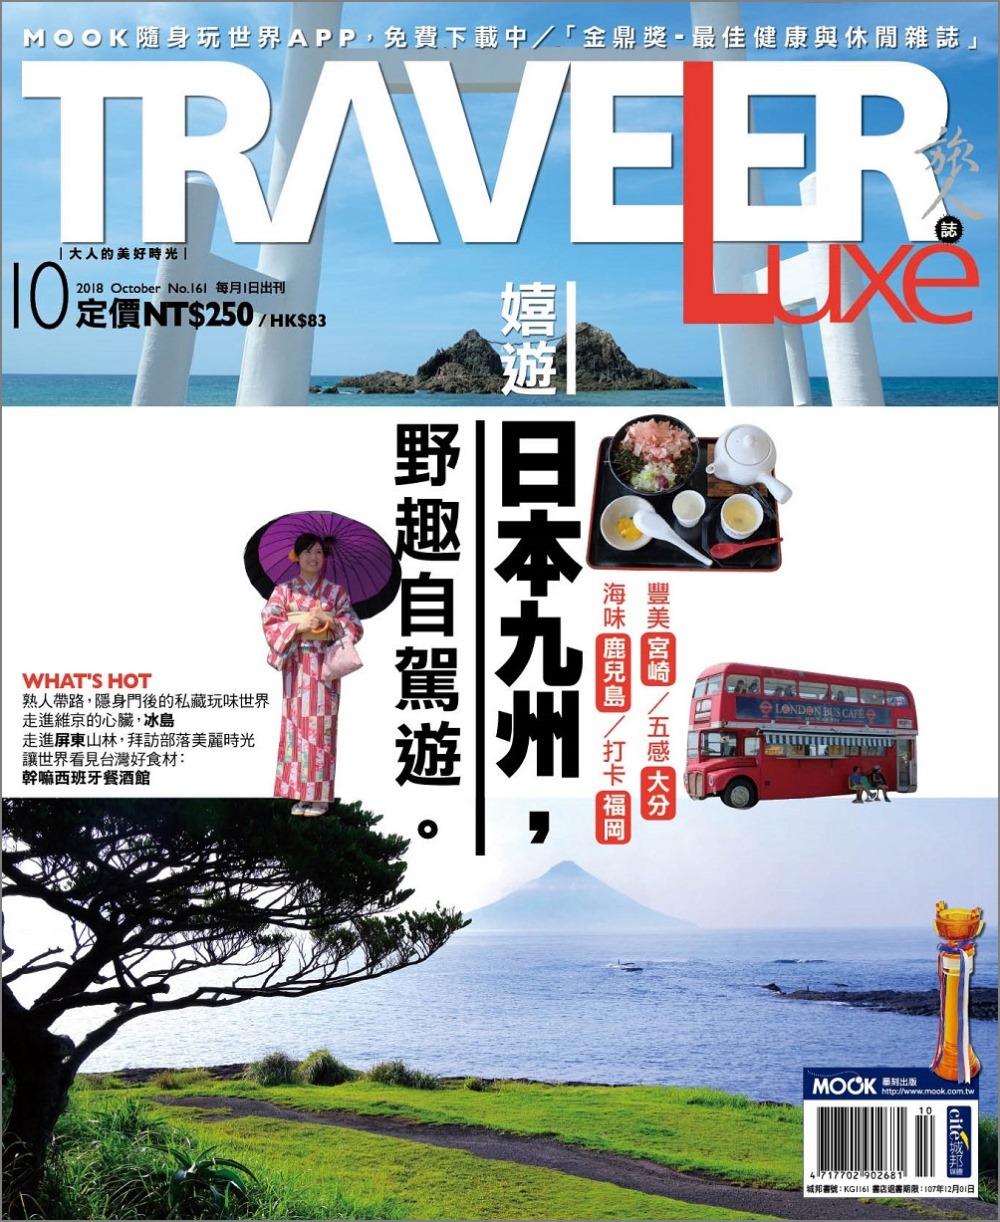 TRAVELER LUXE 旅人誌 10月號/2018 第161期+安耐曬運動型清爽噴霧(限台灣)